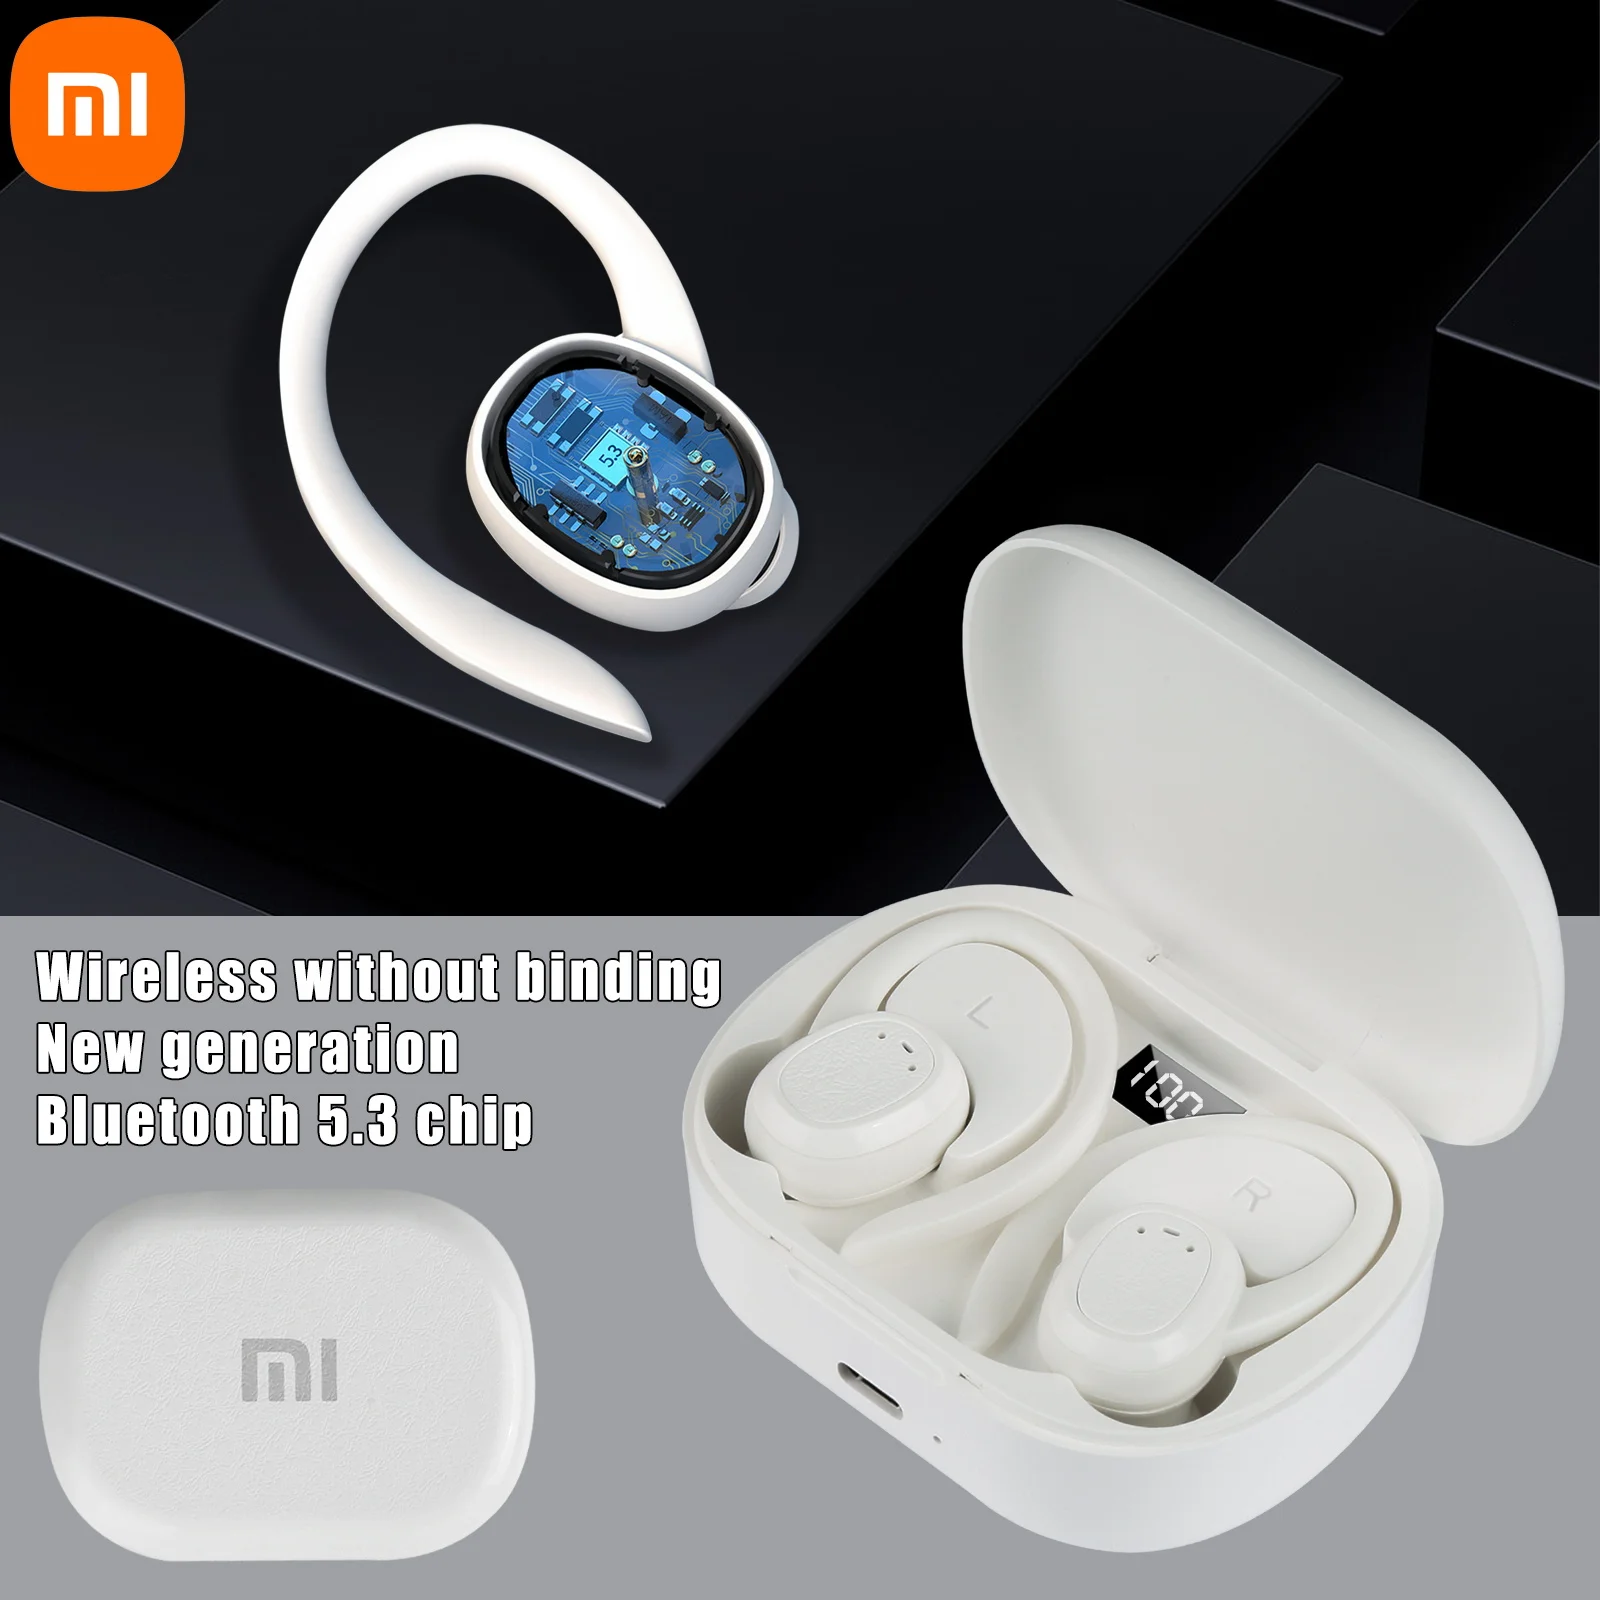 Wireless Xiaomi Mijia S260 Earphones Bluetooth Headphones With Microphone Sports Waterproof Hifi Stereo Earbuds Portable Headset